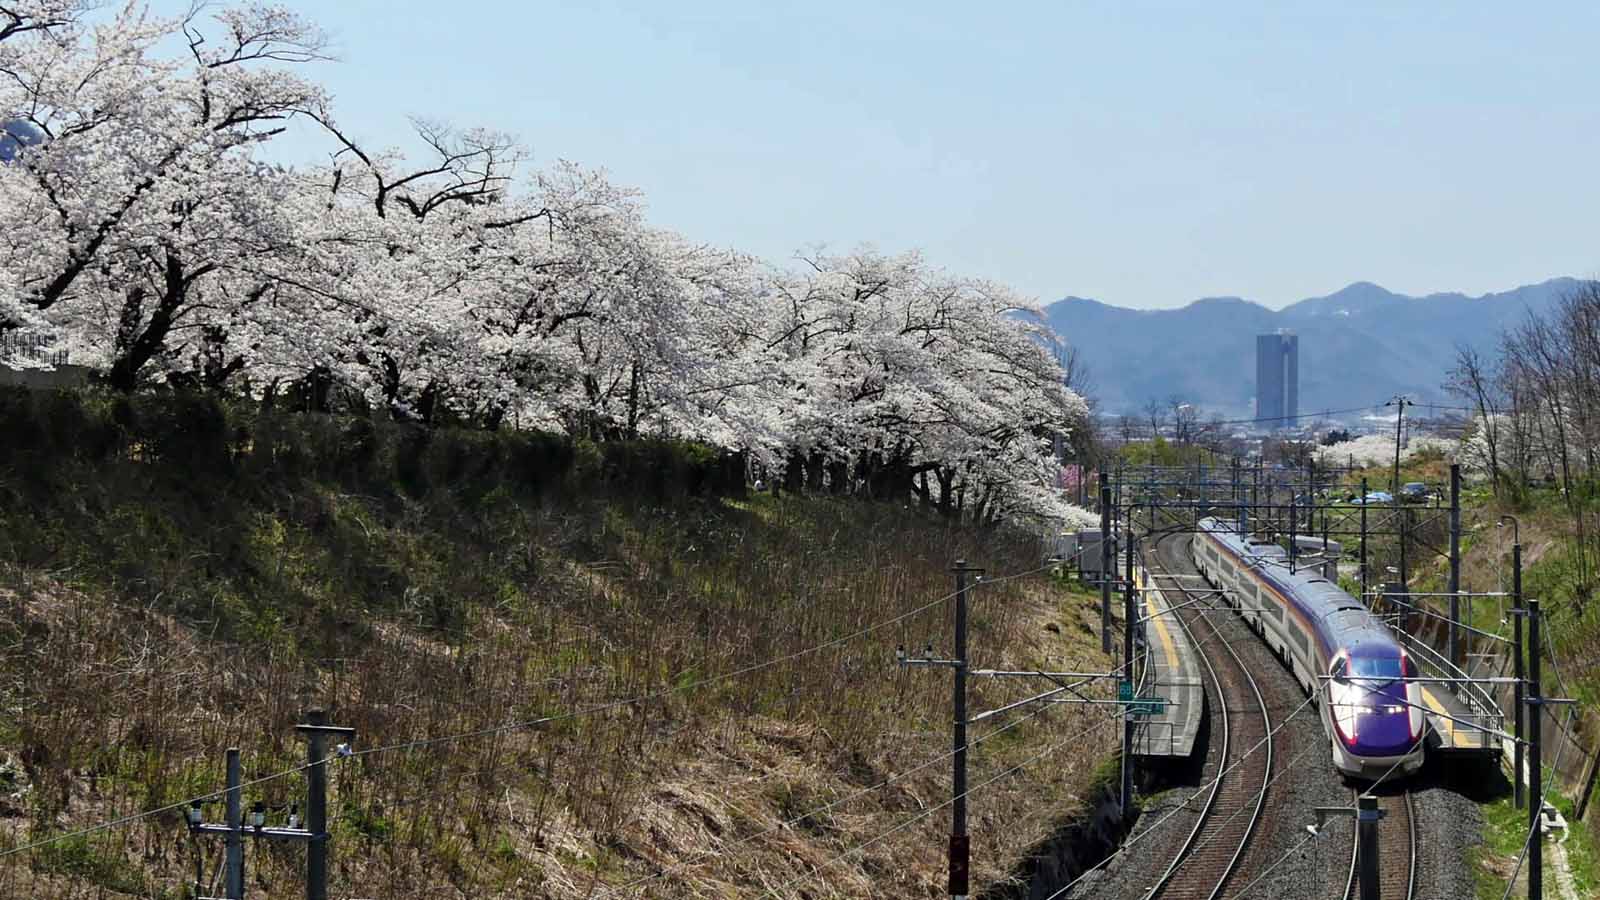 Cherry blossoms and Shinkansen train